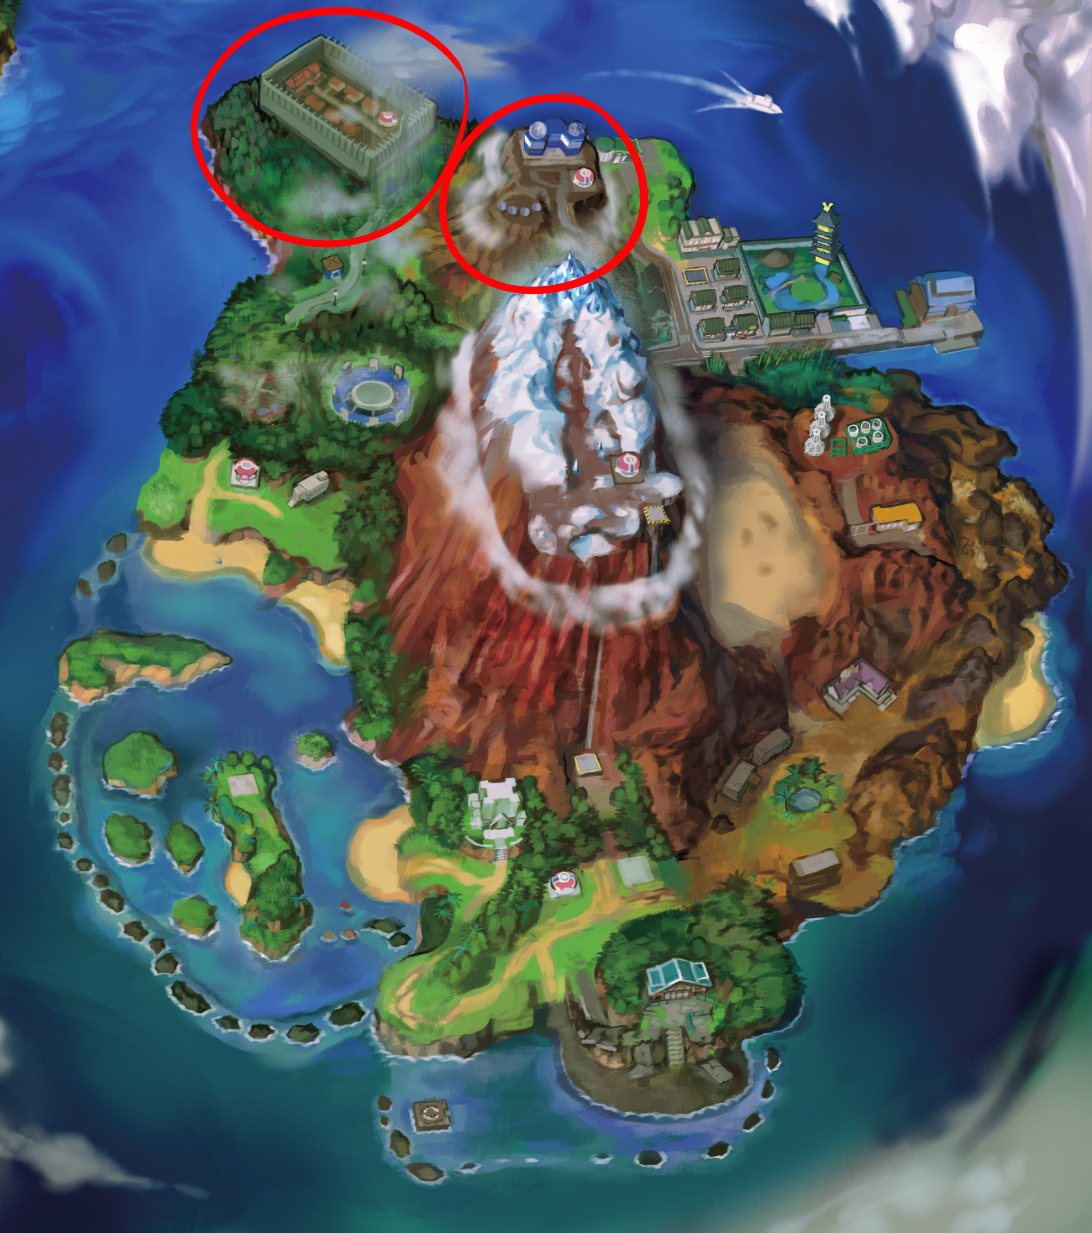 Ula’Ula island in the Anime vs. Ula’Ula island in the games